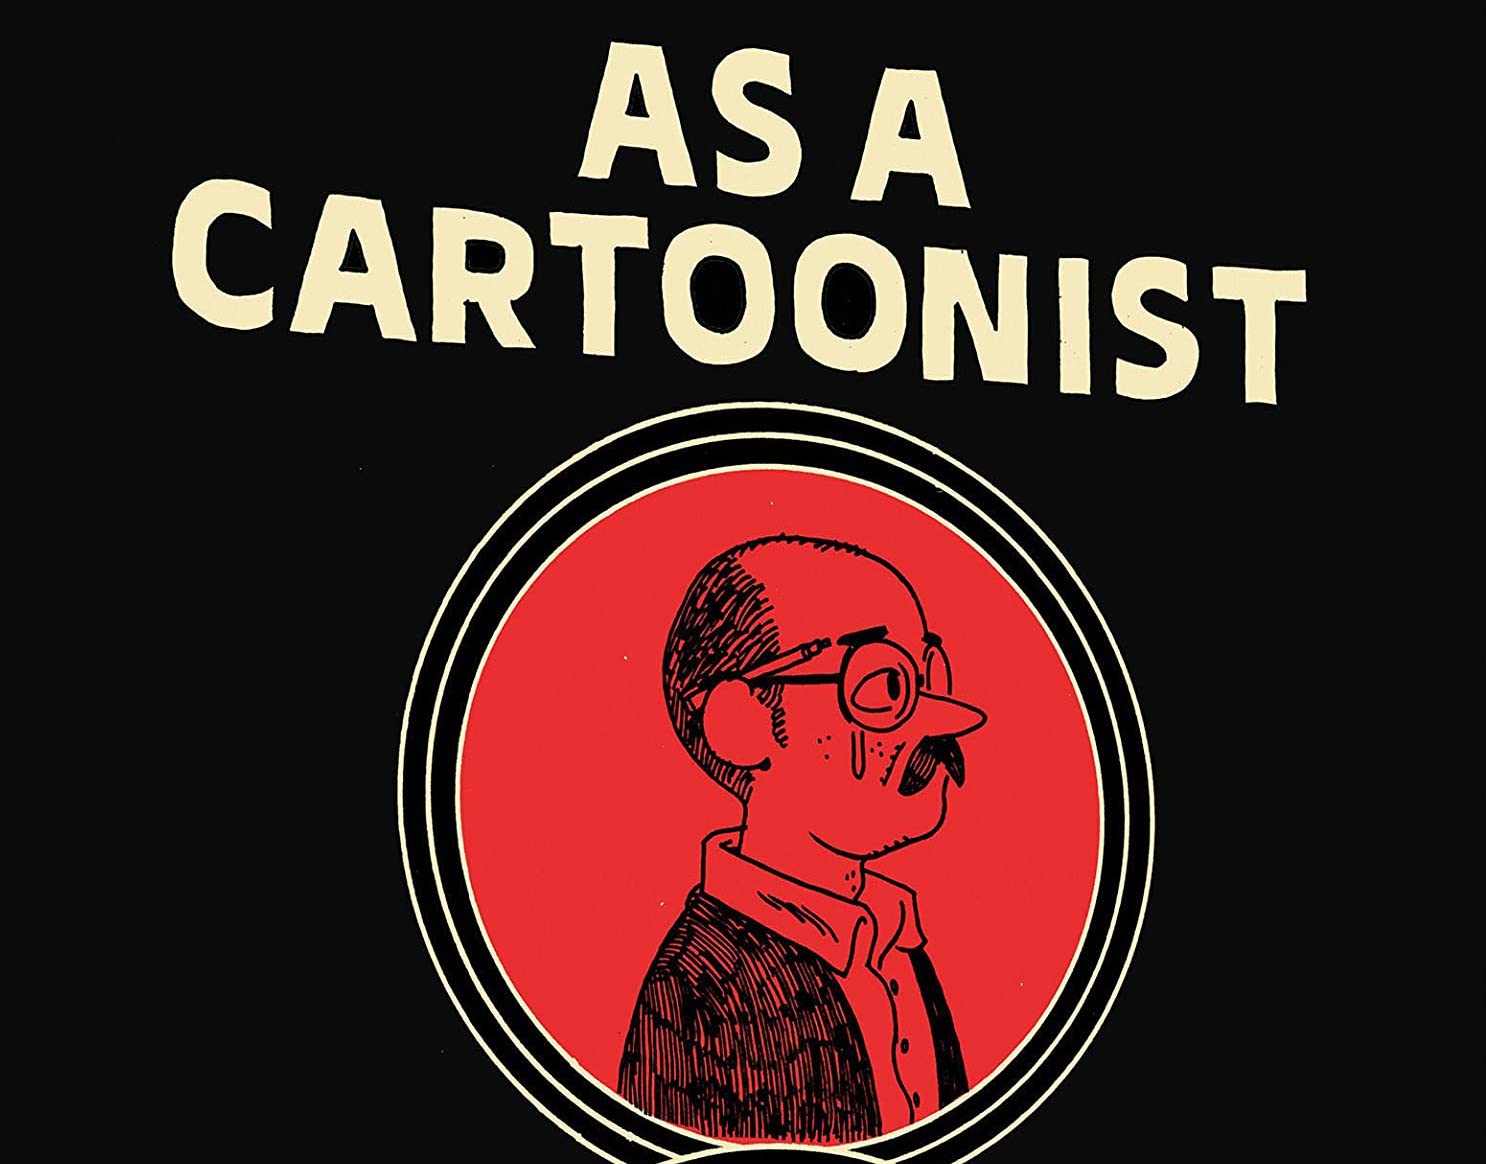 'As a Cartoonist' presents a man struggling against himself